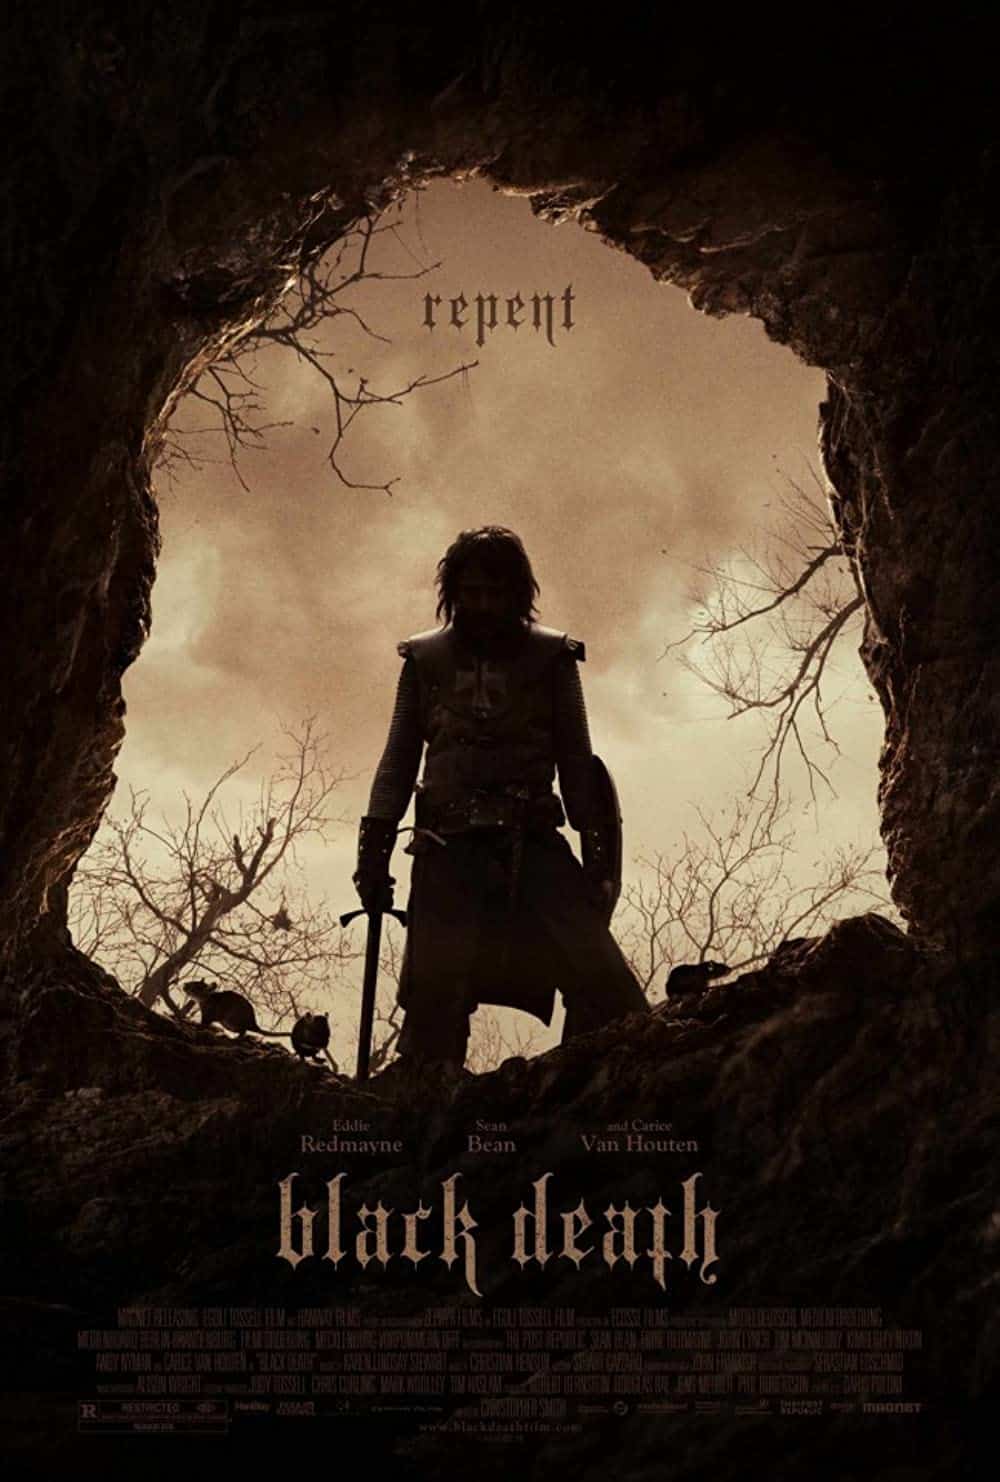 Black Death (2010) Best Knight Movies to Add in Your Watchlist